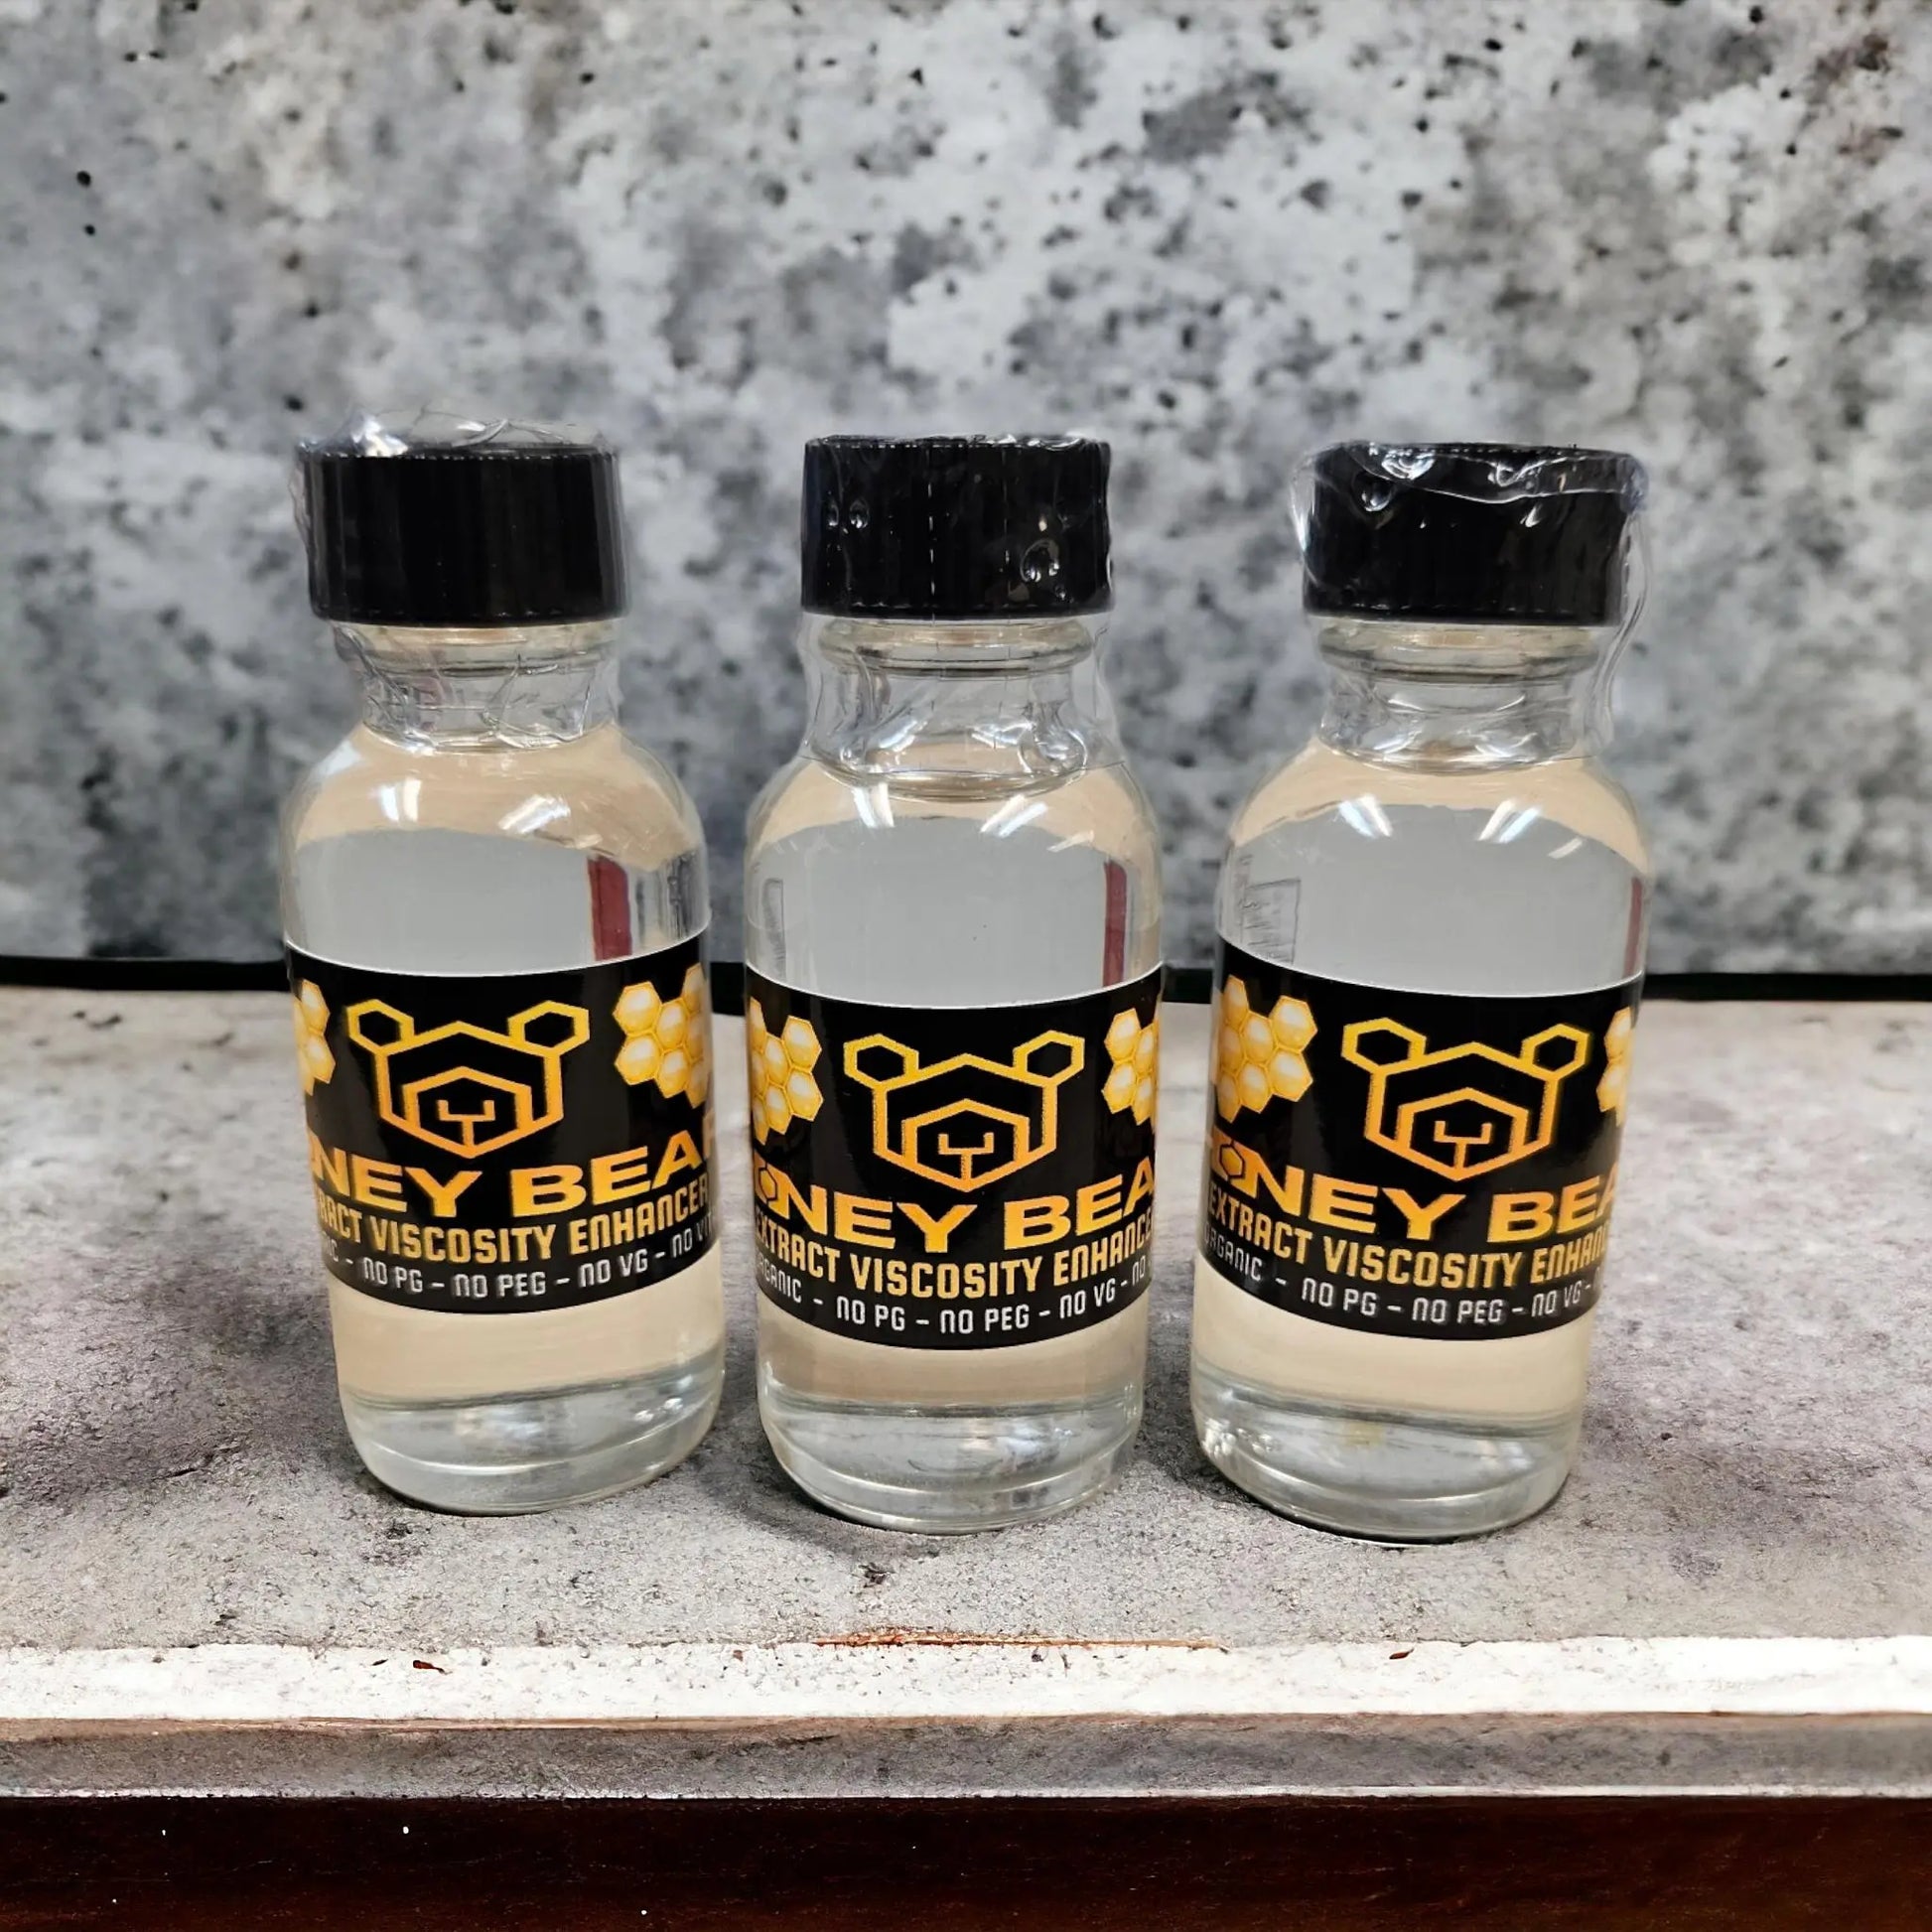 Honey Bear Organic Viscosity Enhancer Diluent - Viking Lab Supply